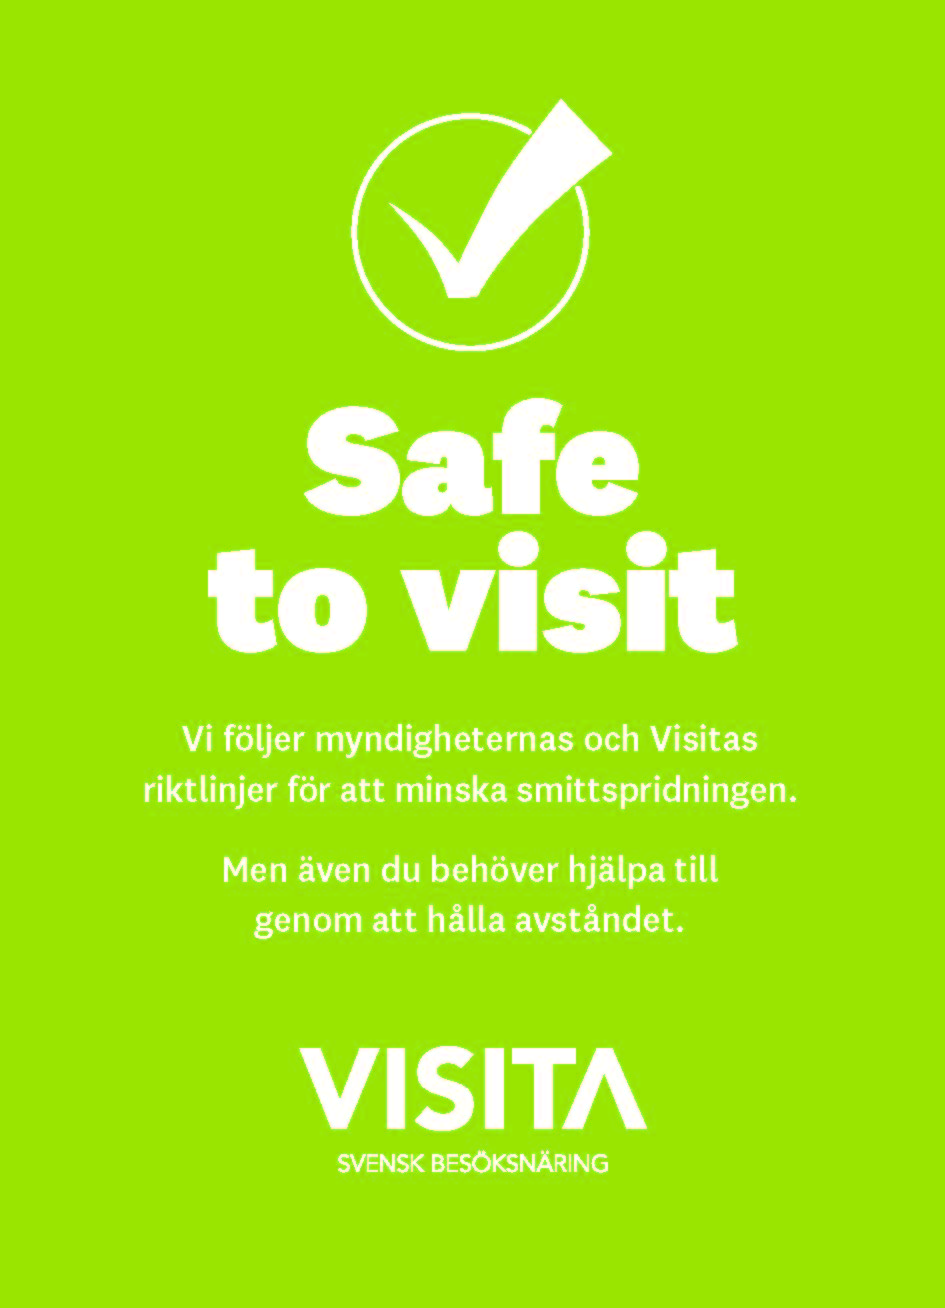 visita_dekal_safe_to_visit